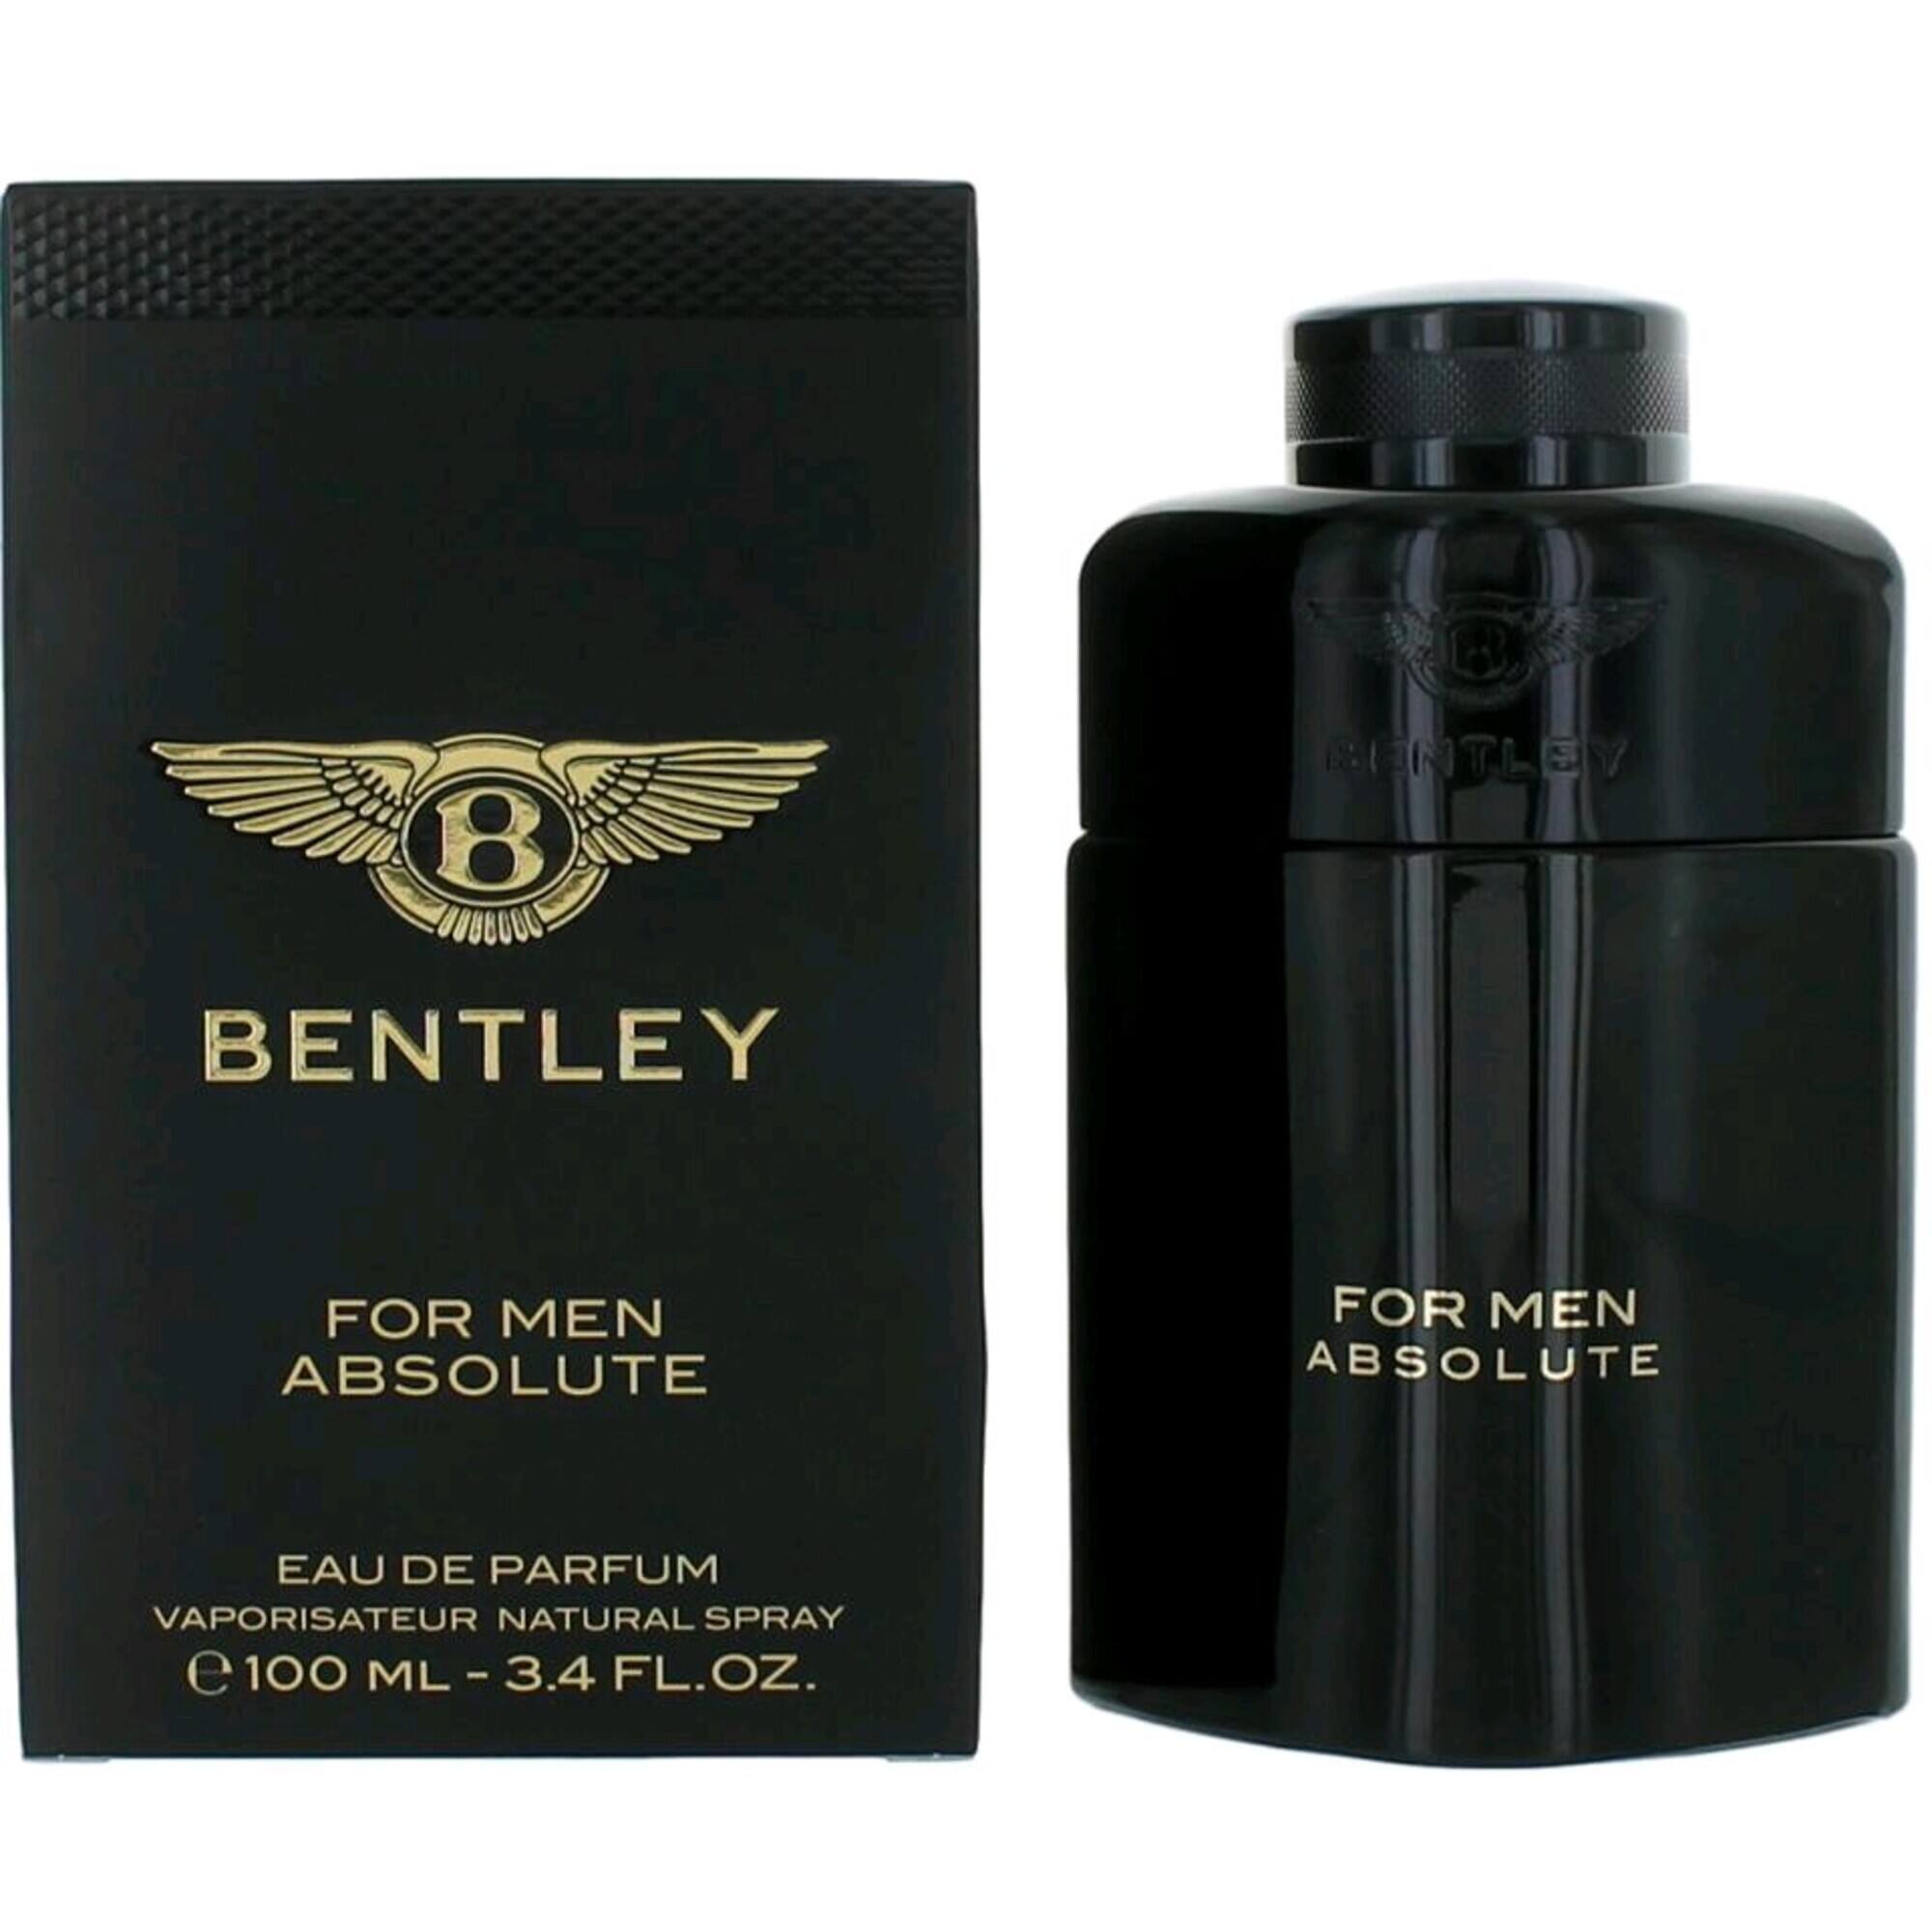 Bentley Men's Eau De Parfum Spray - Absolute with Masculine Fragrance, 3.4 oz